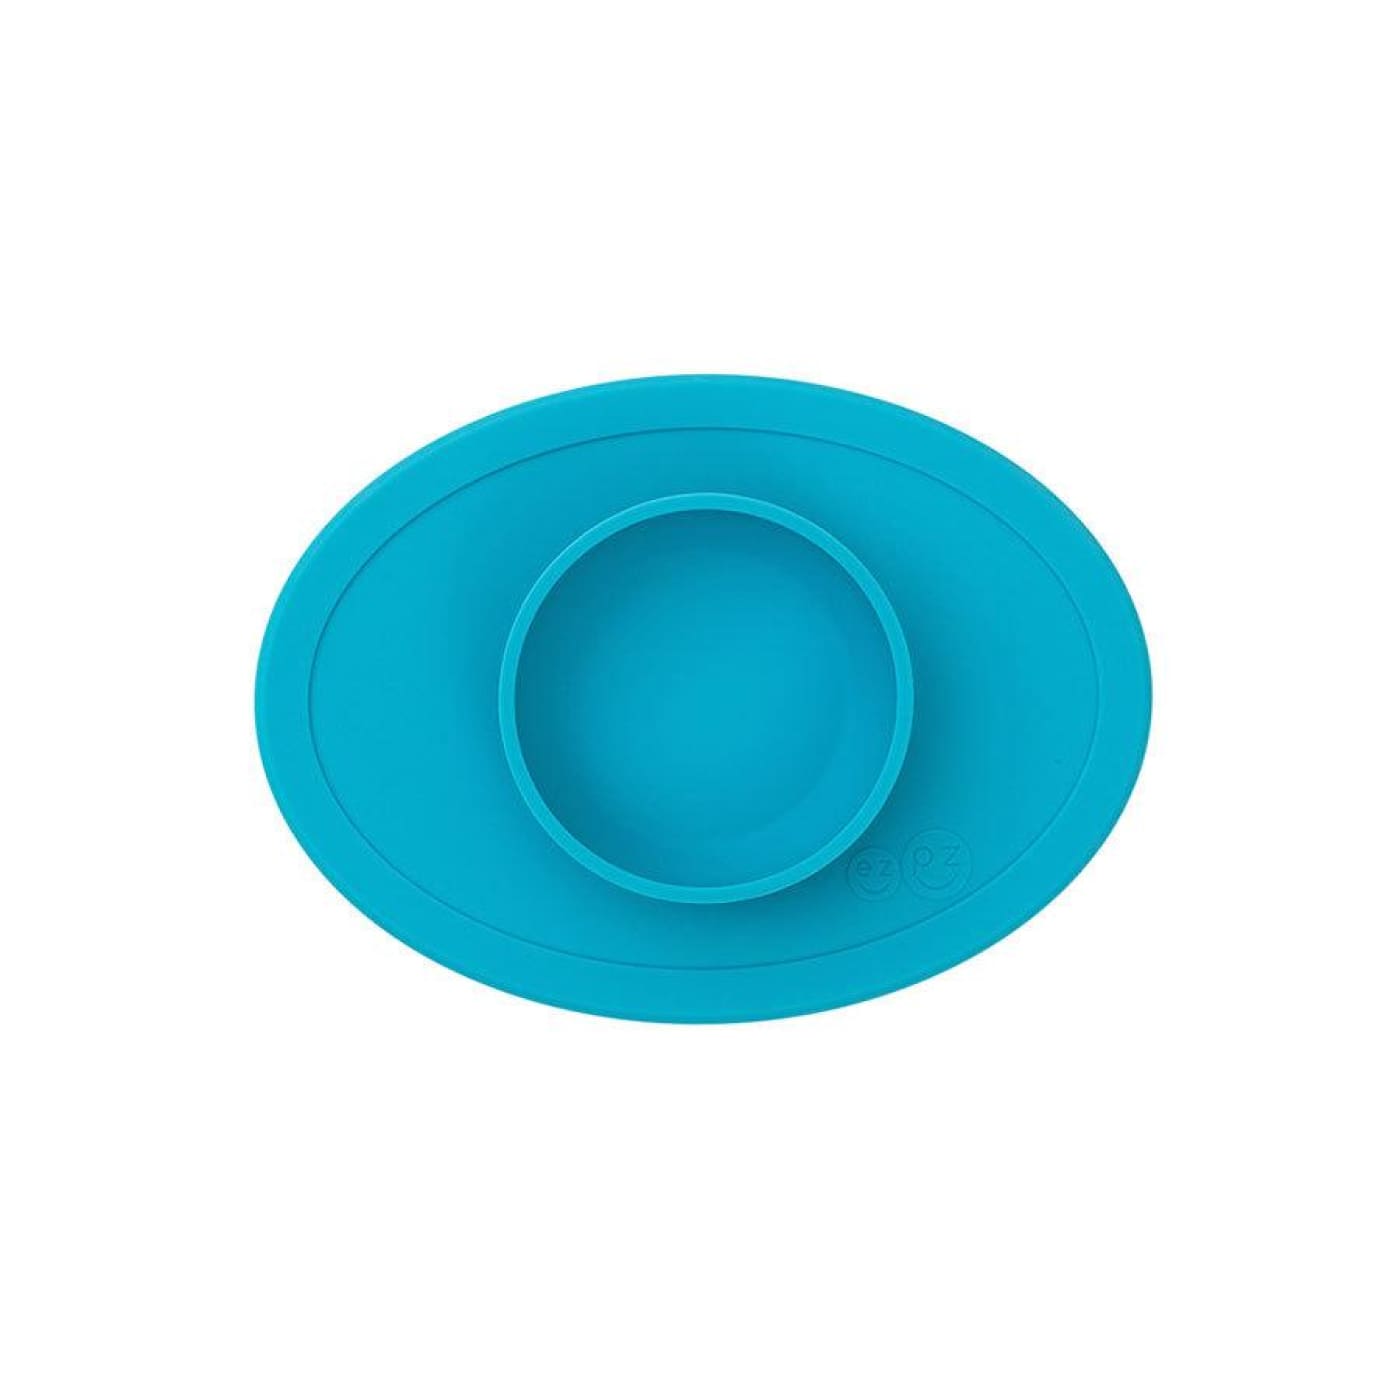 EZPZ Tiny Bowl - Blue - Blue - NURSING & FEEDING - CUTLERY/PLATES/BOWLS/TOYS